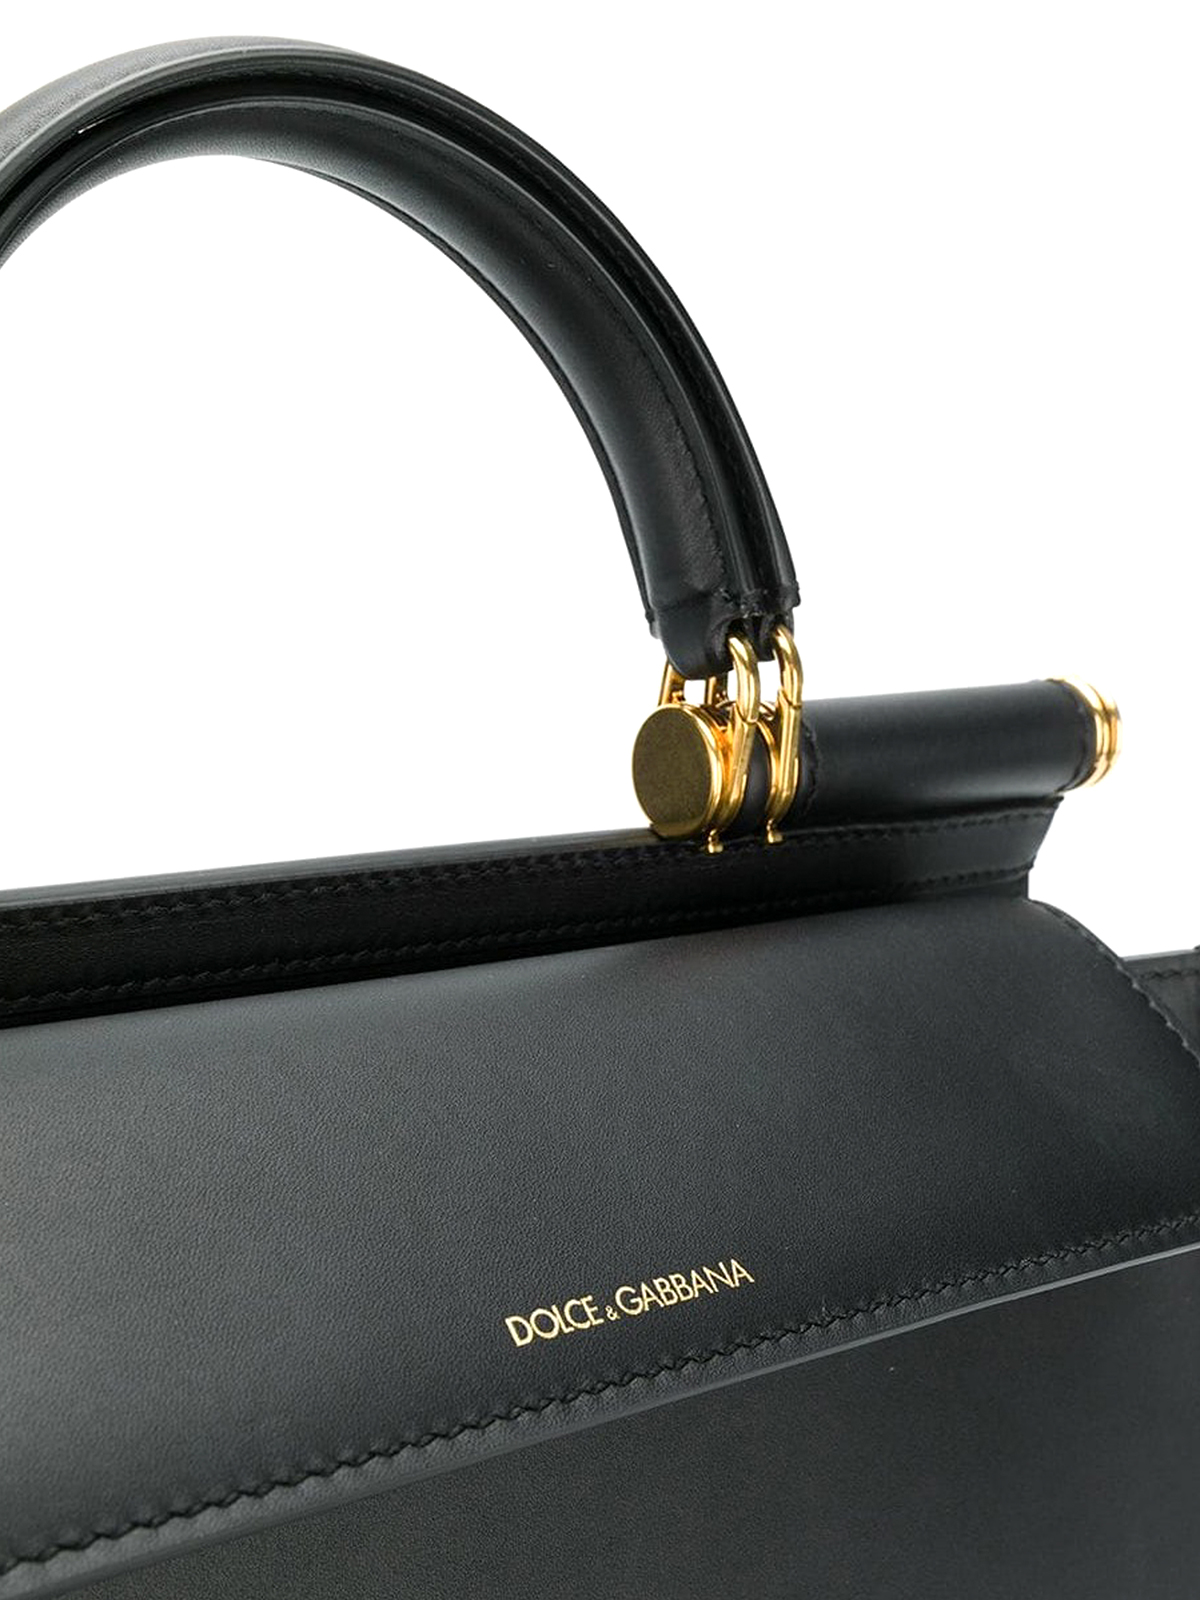 Totes bags Dolce & Gabbana - Sicily 58 large leather bag - BB6621AV38580999